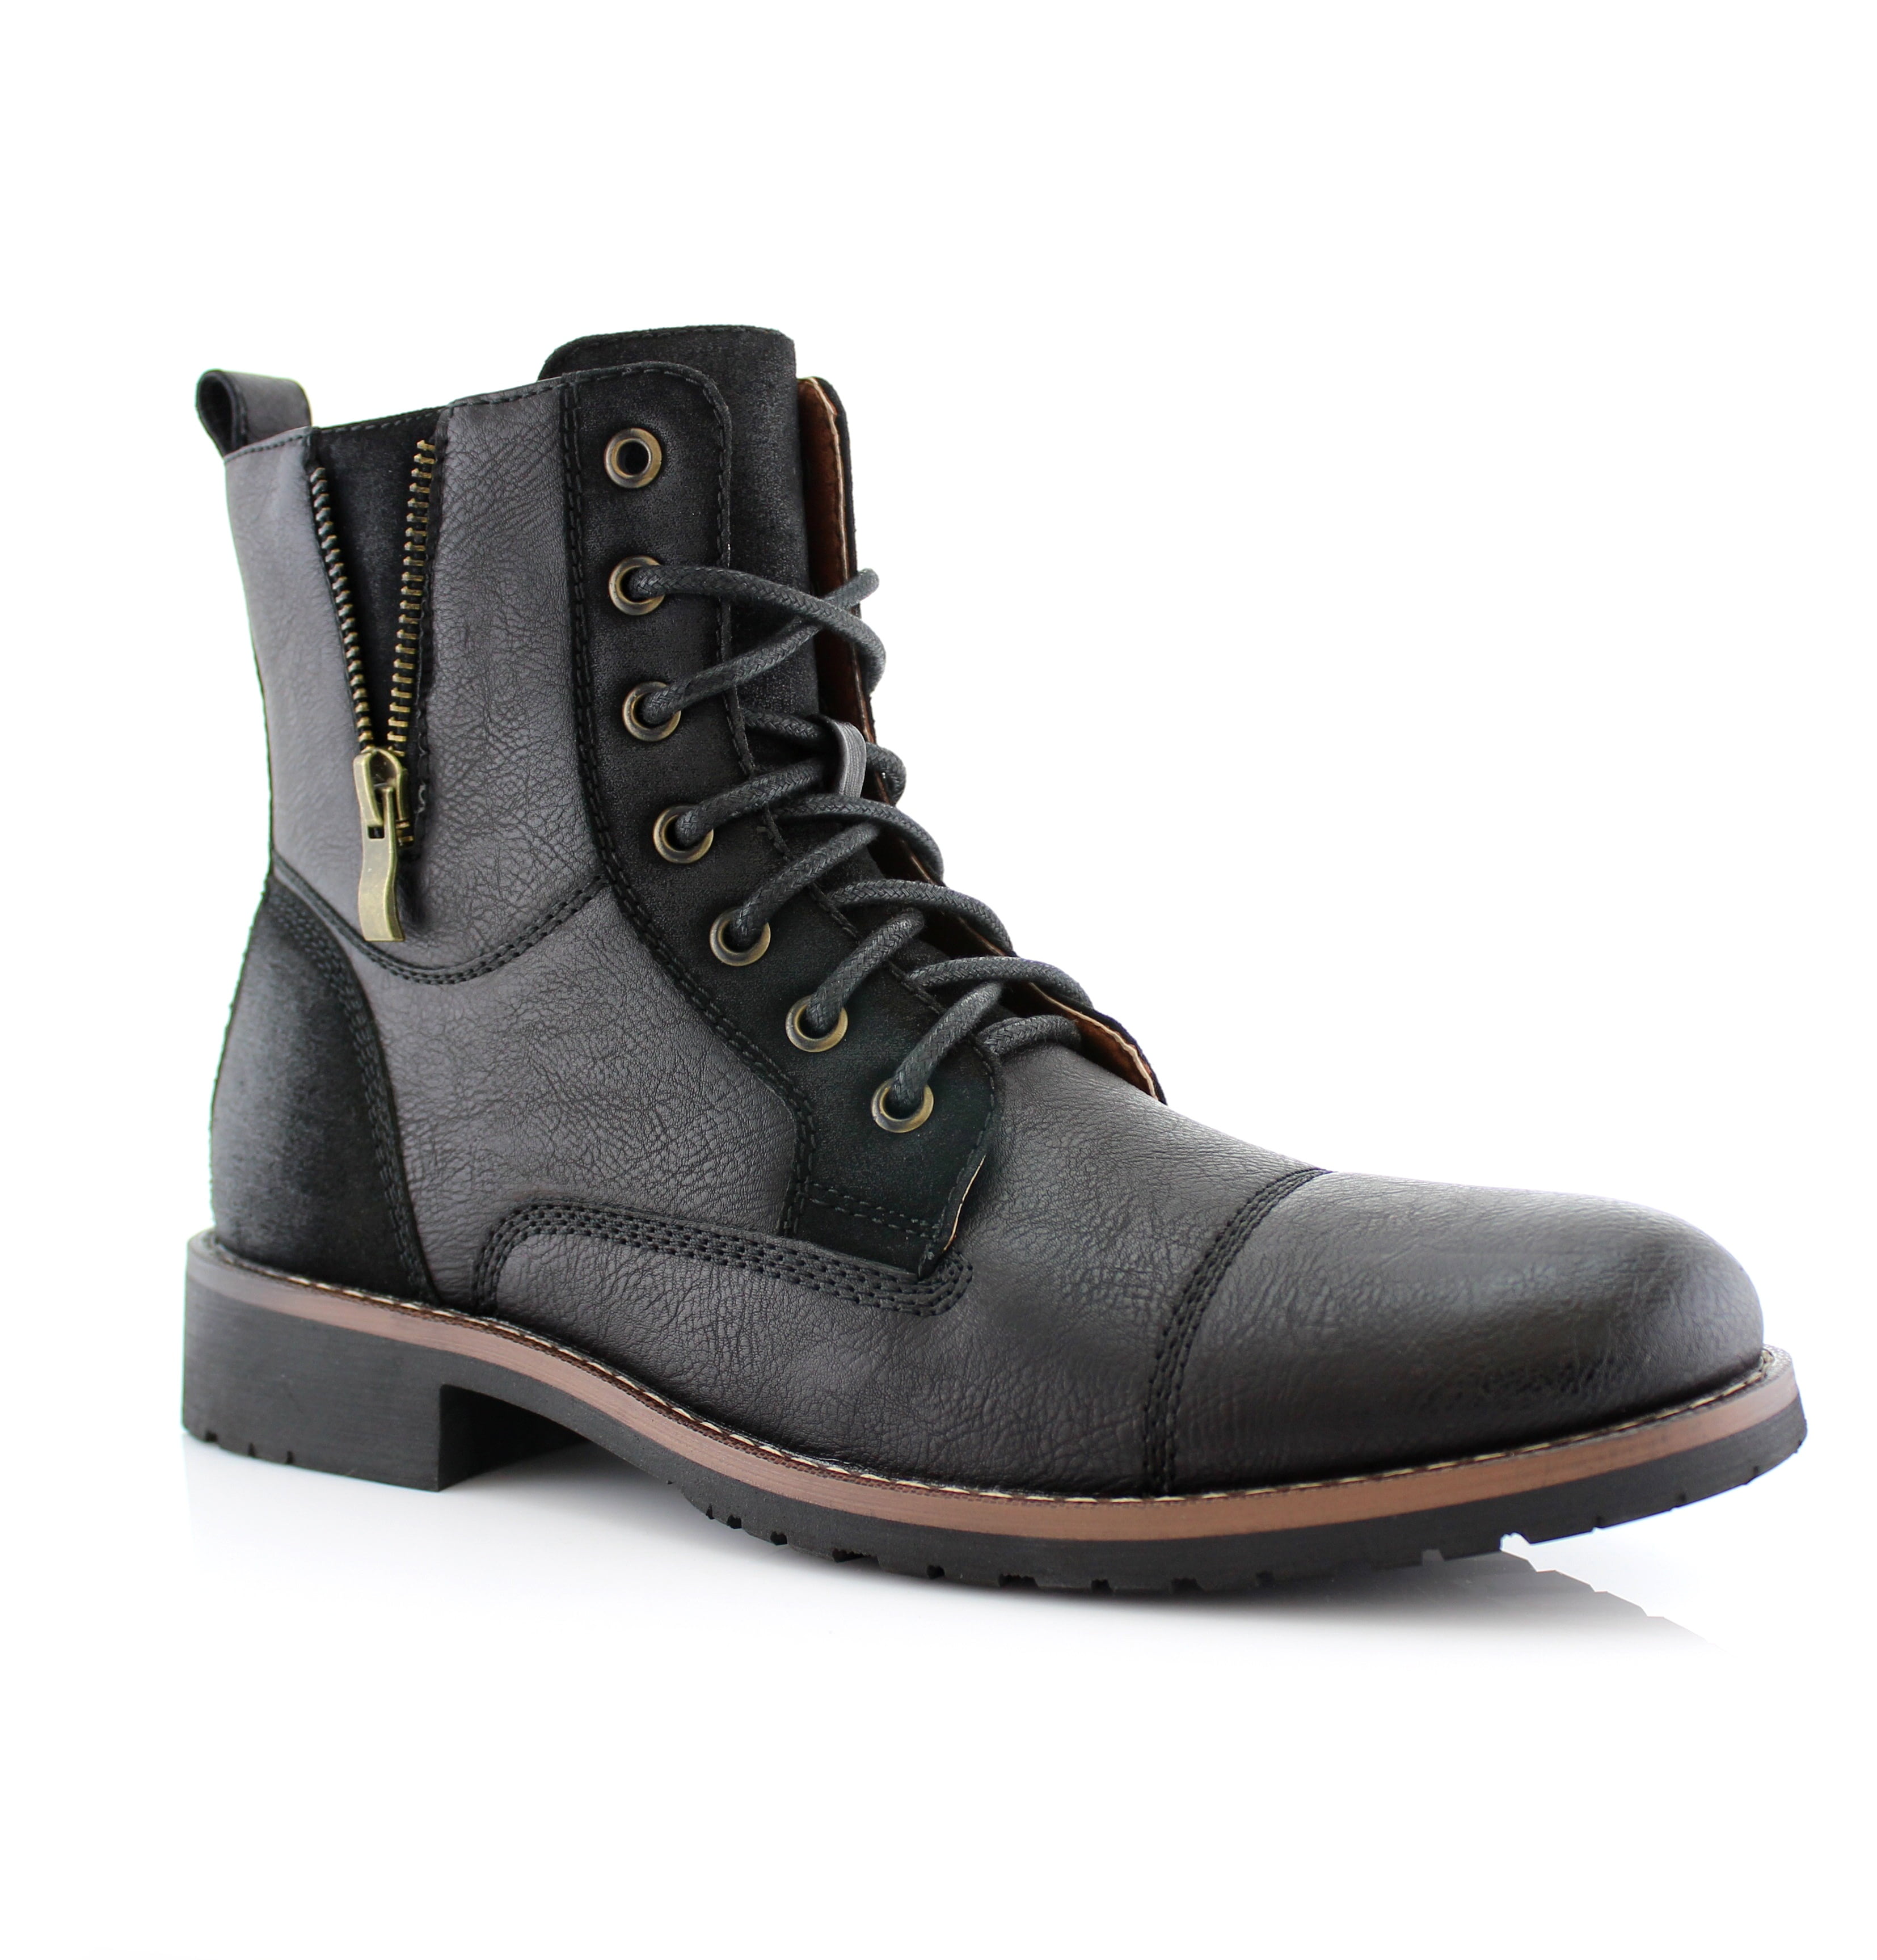 Ferro Aldo Stylish Zipper Boots for Work and Casual Wear -